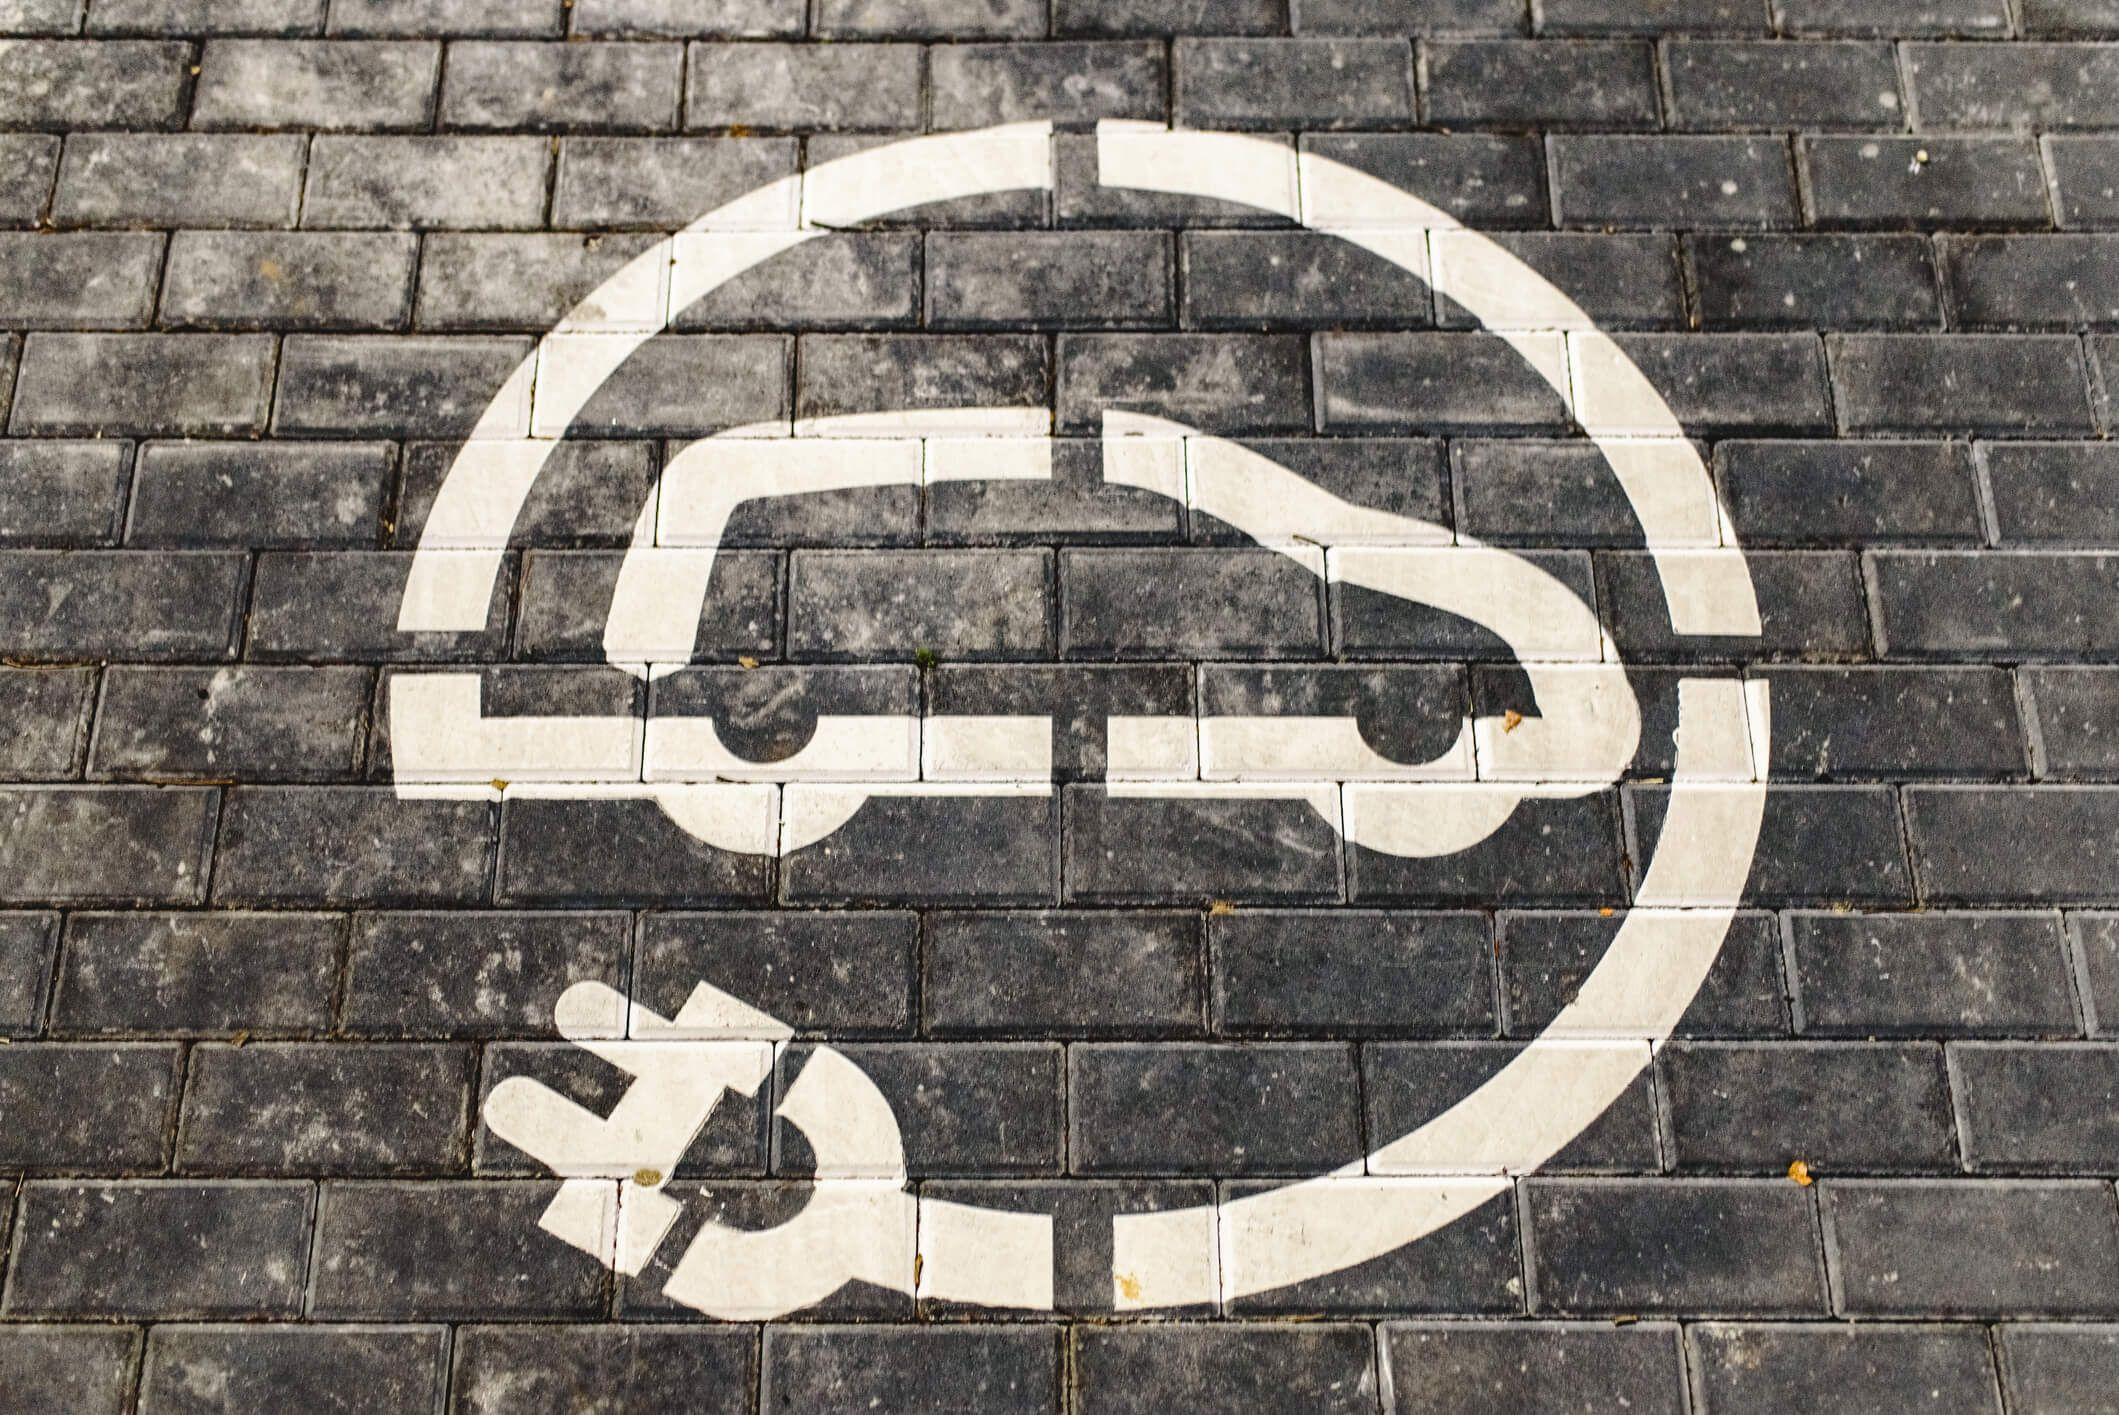 Electric vehicles icon on grey bricks